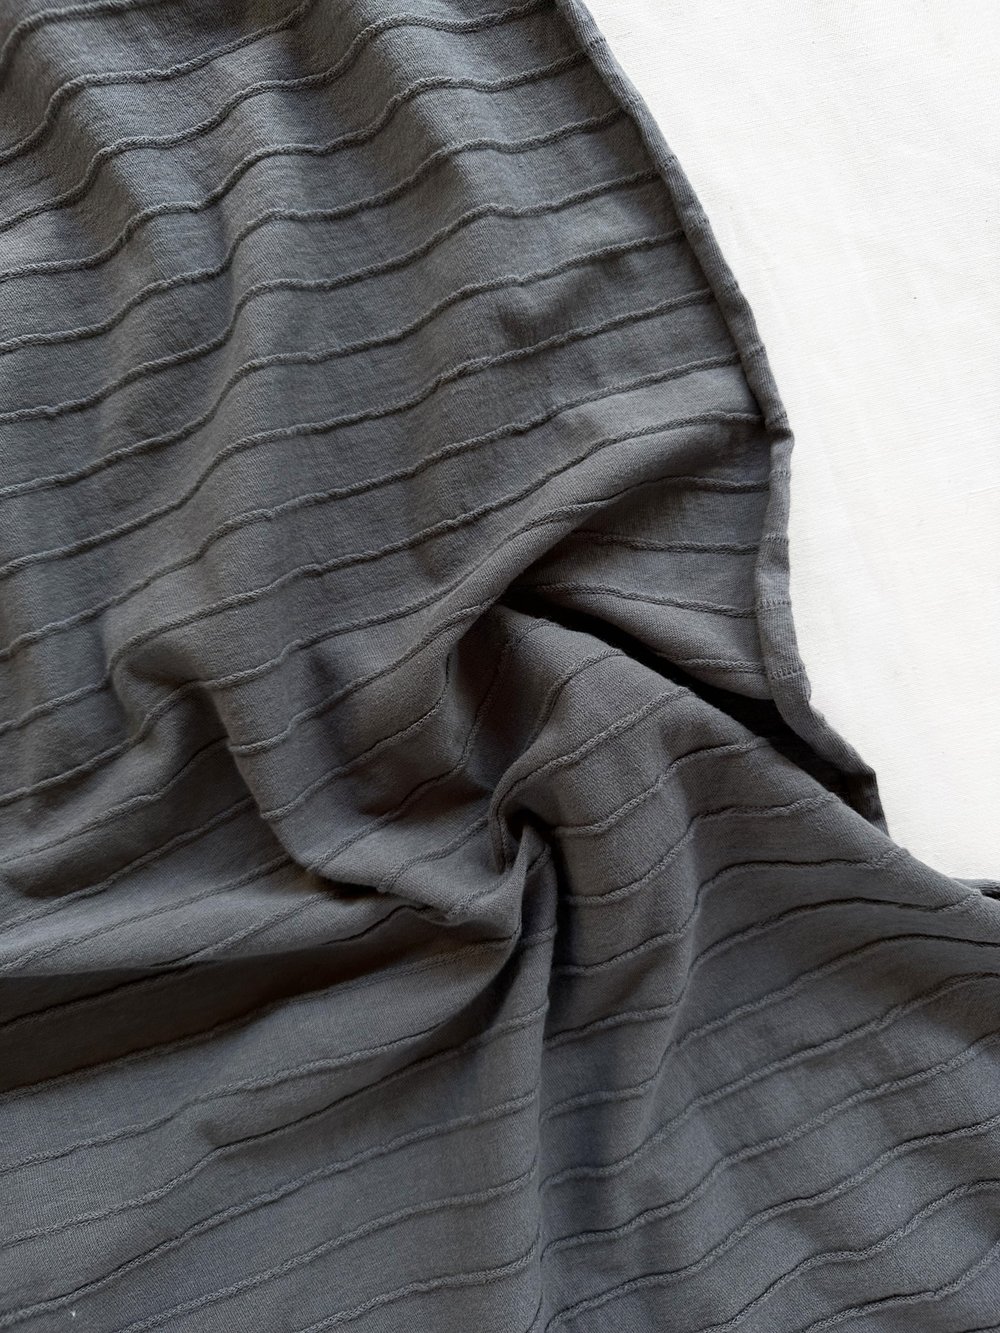 Per 1/2 Yard Wide Tucked Grey Cotton Jersey — L'Etoffe Fabrics Online